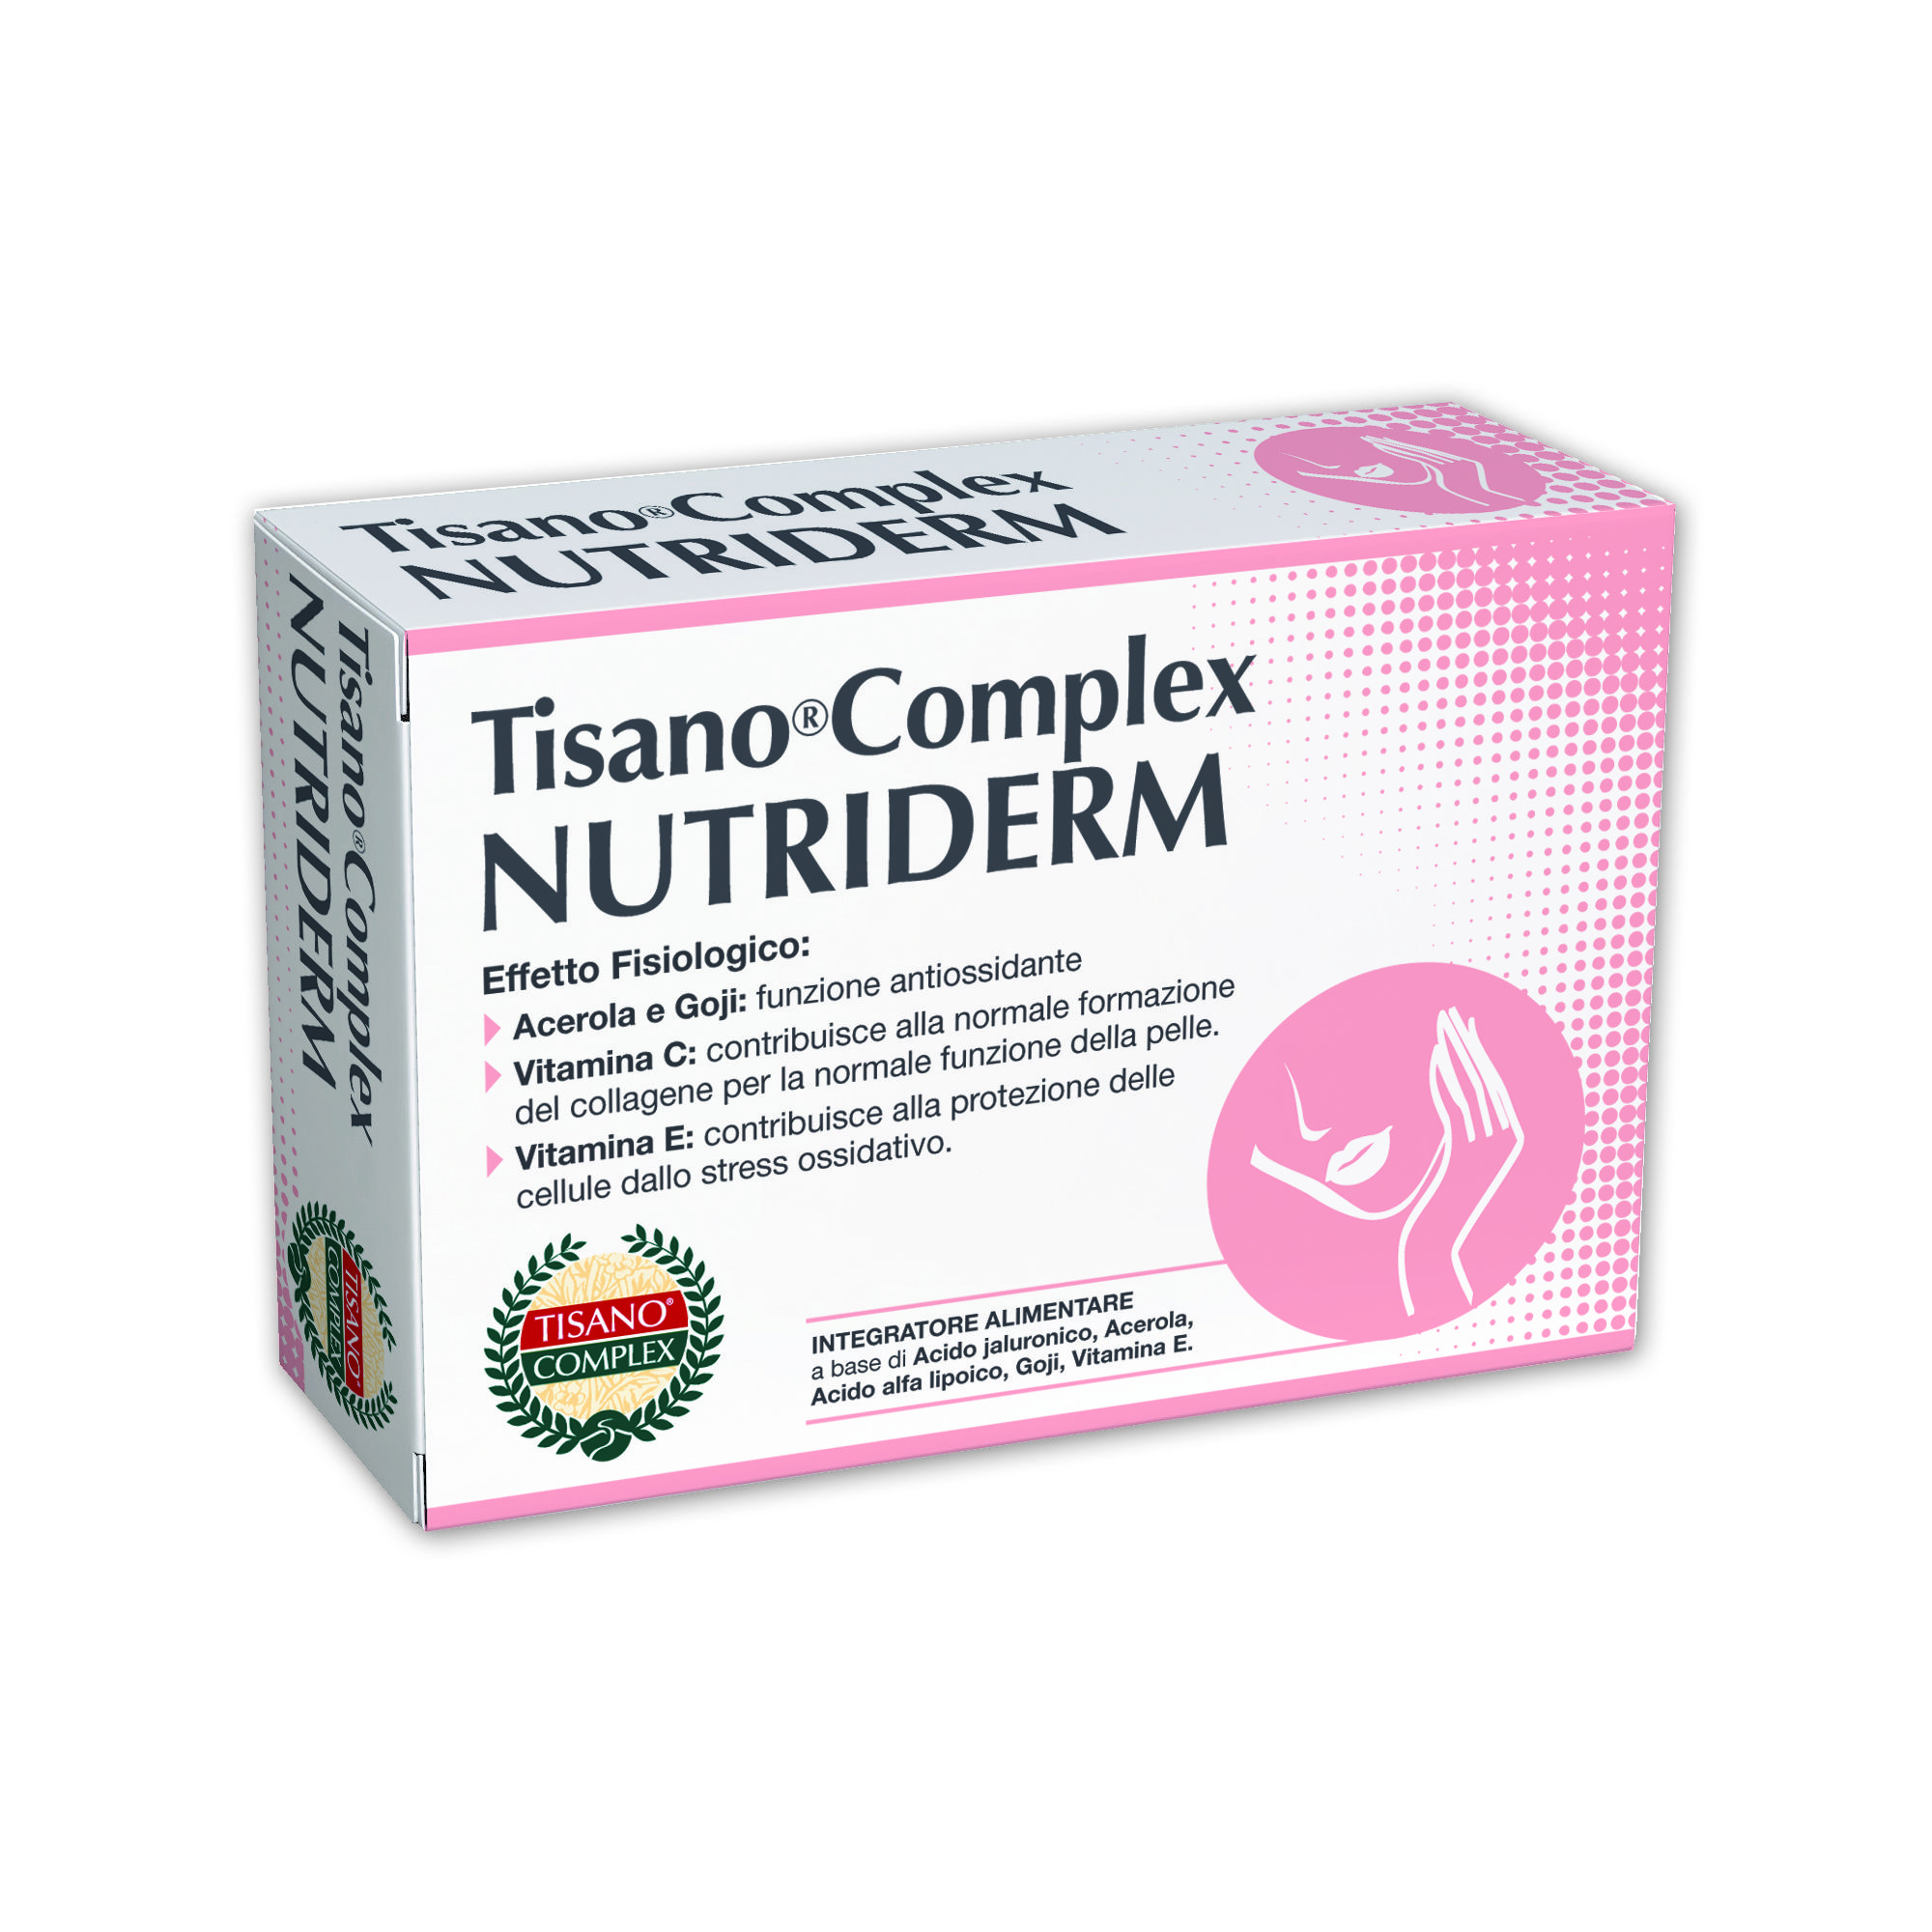 nutriderm_tisano complex